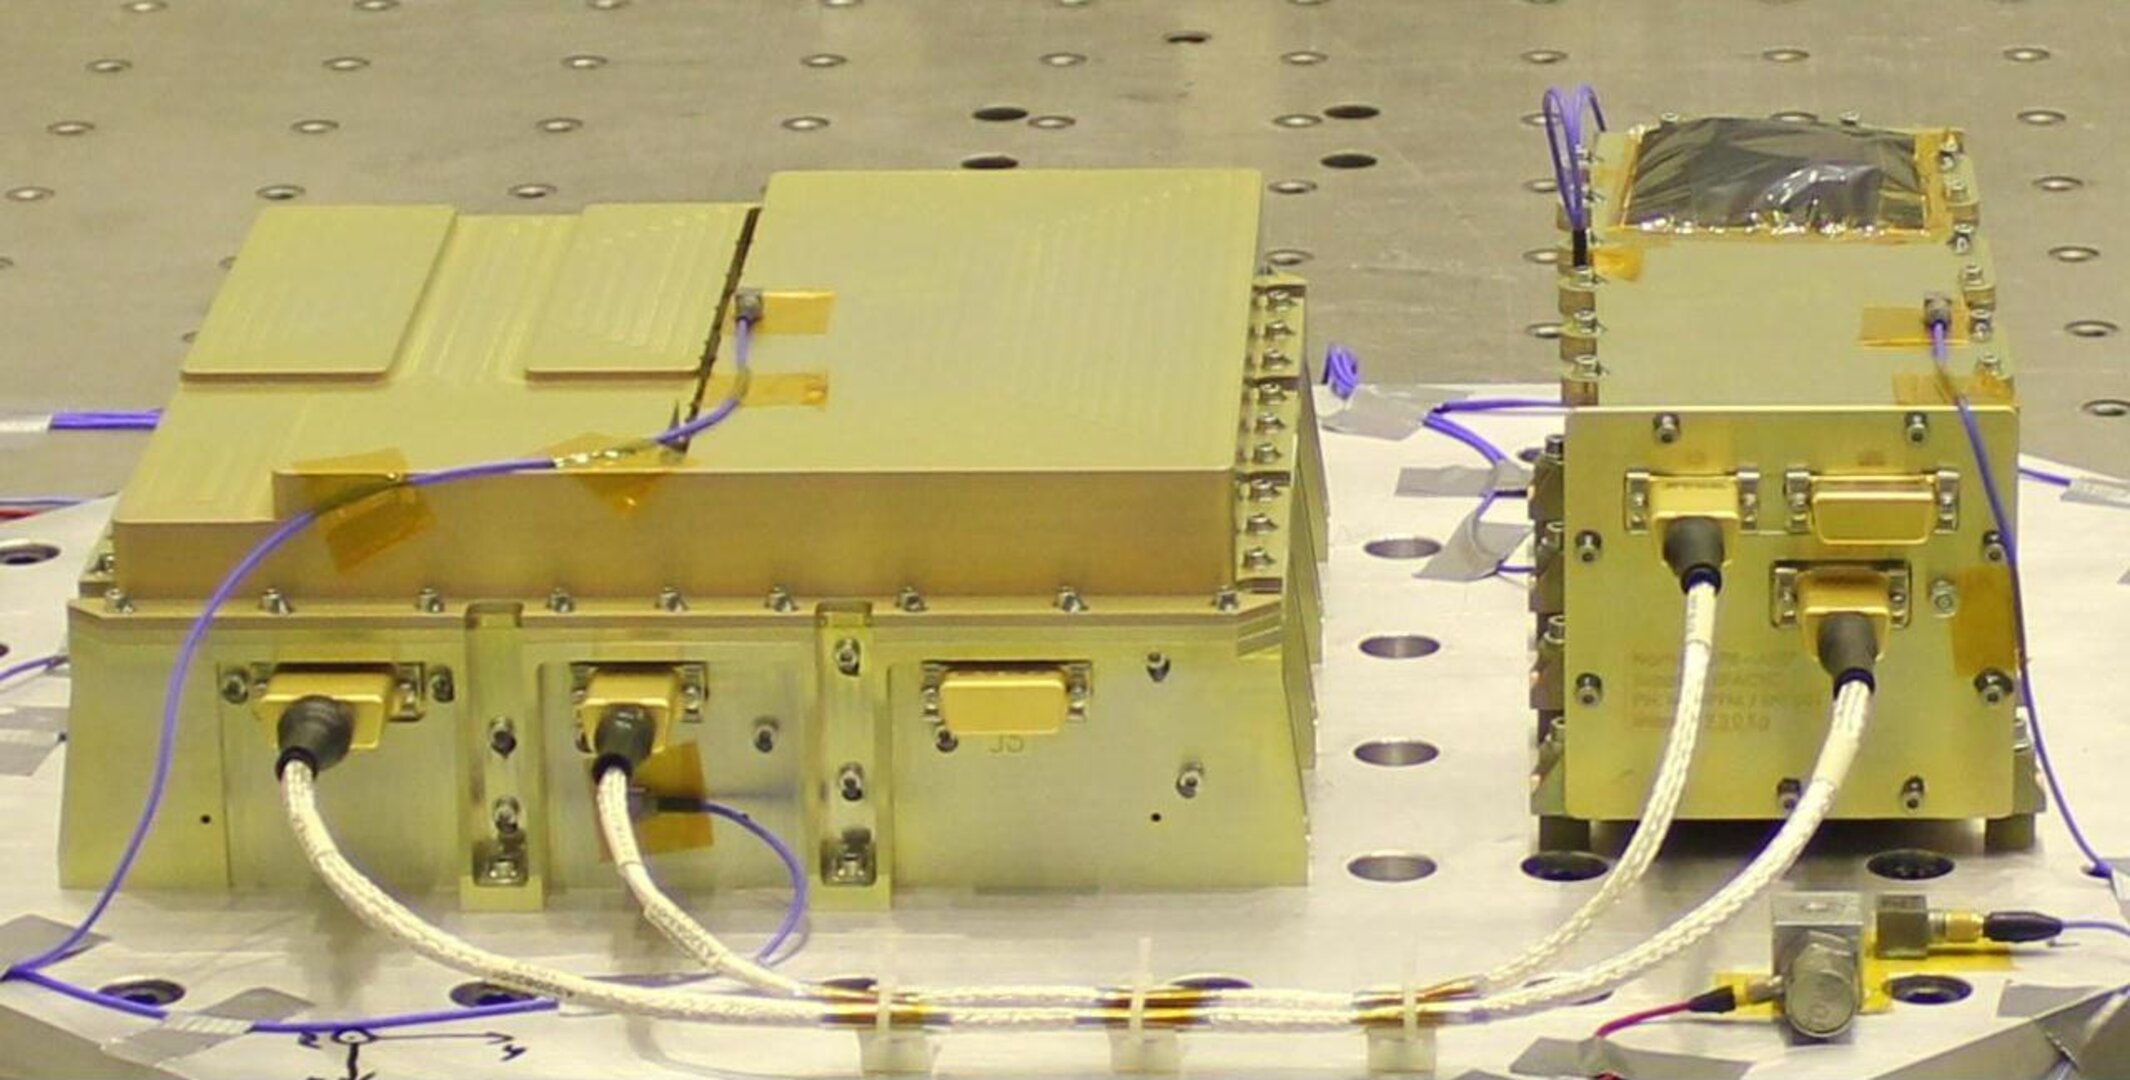 Environmental Testing and Radiation Sensor, TDP 8 for Alphasat